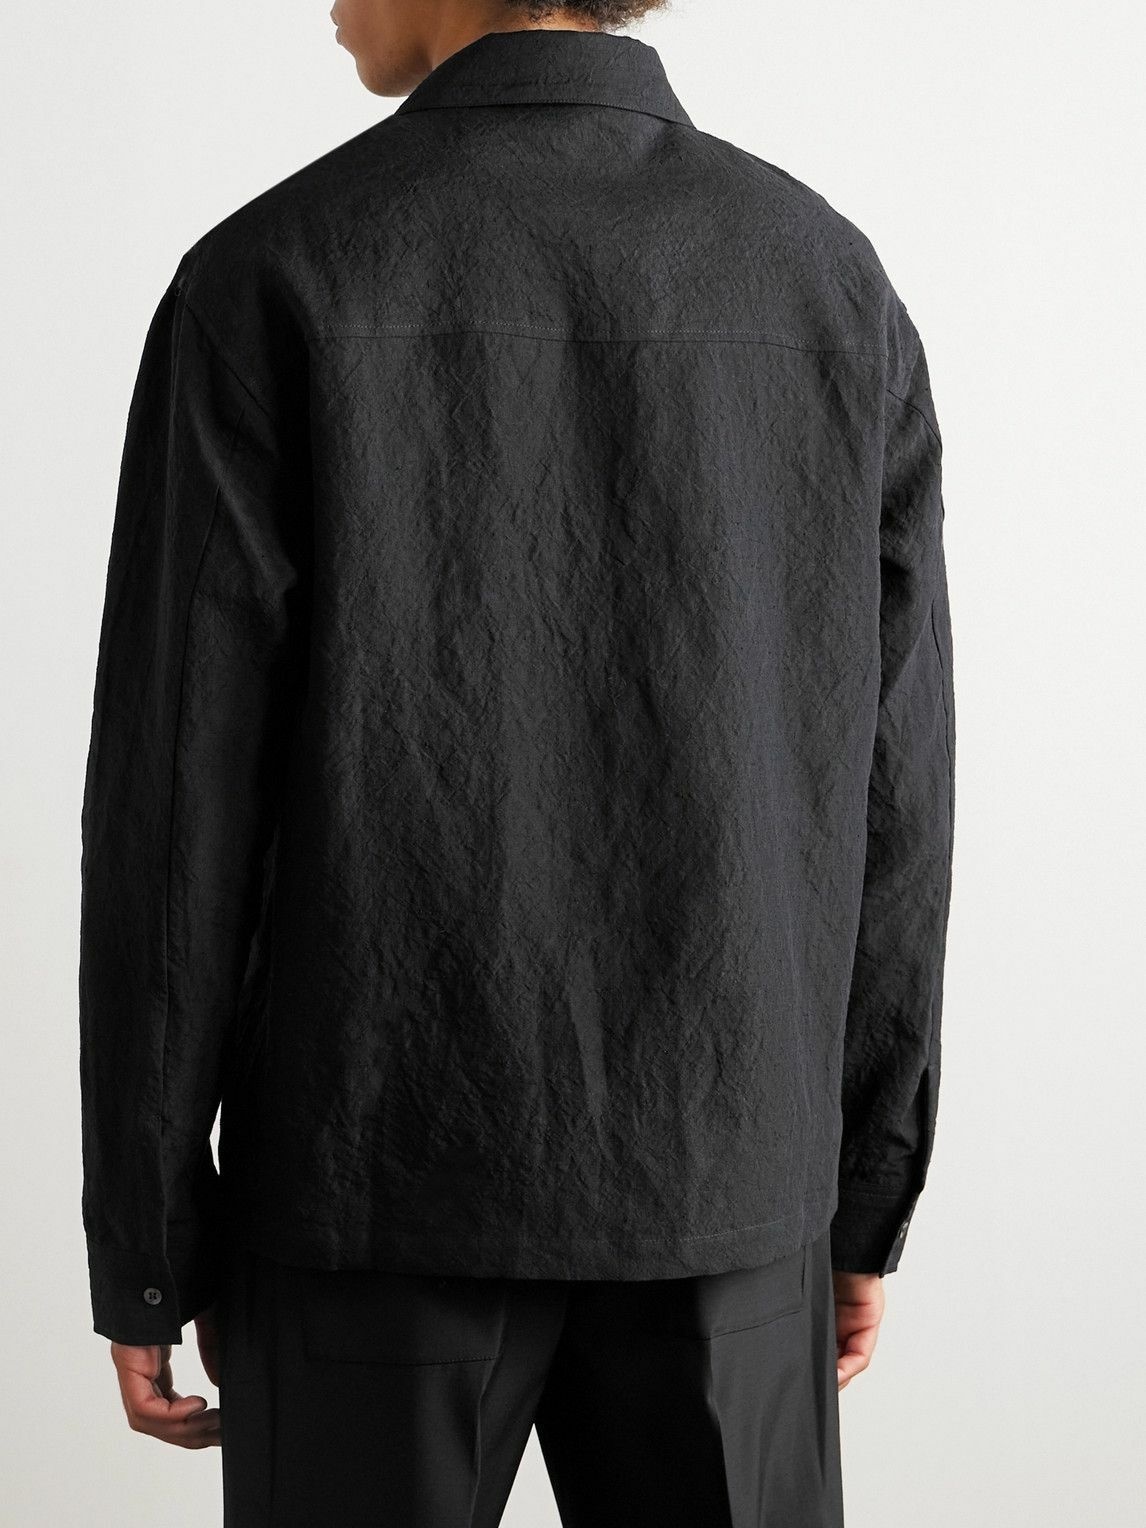 RÓHE - Hammered Linen Shirt - Black